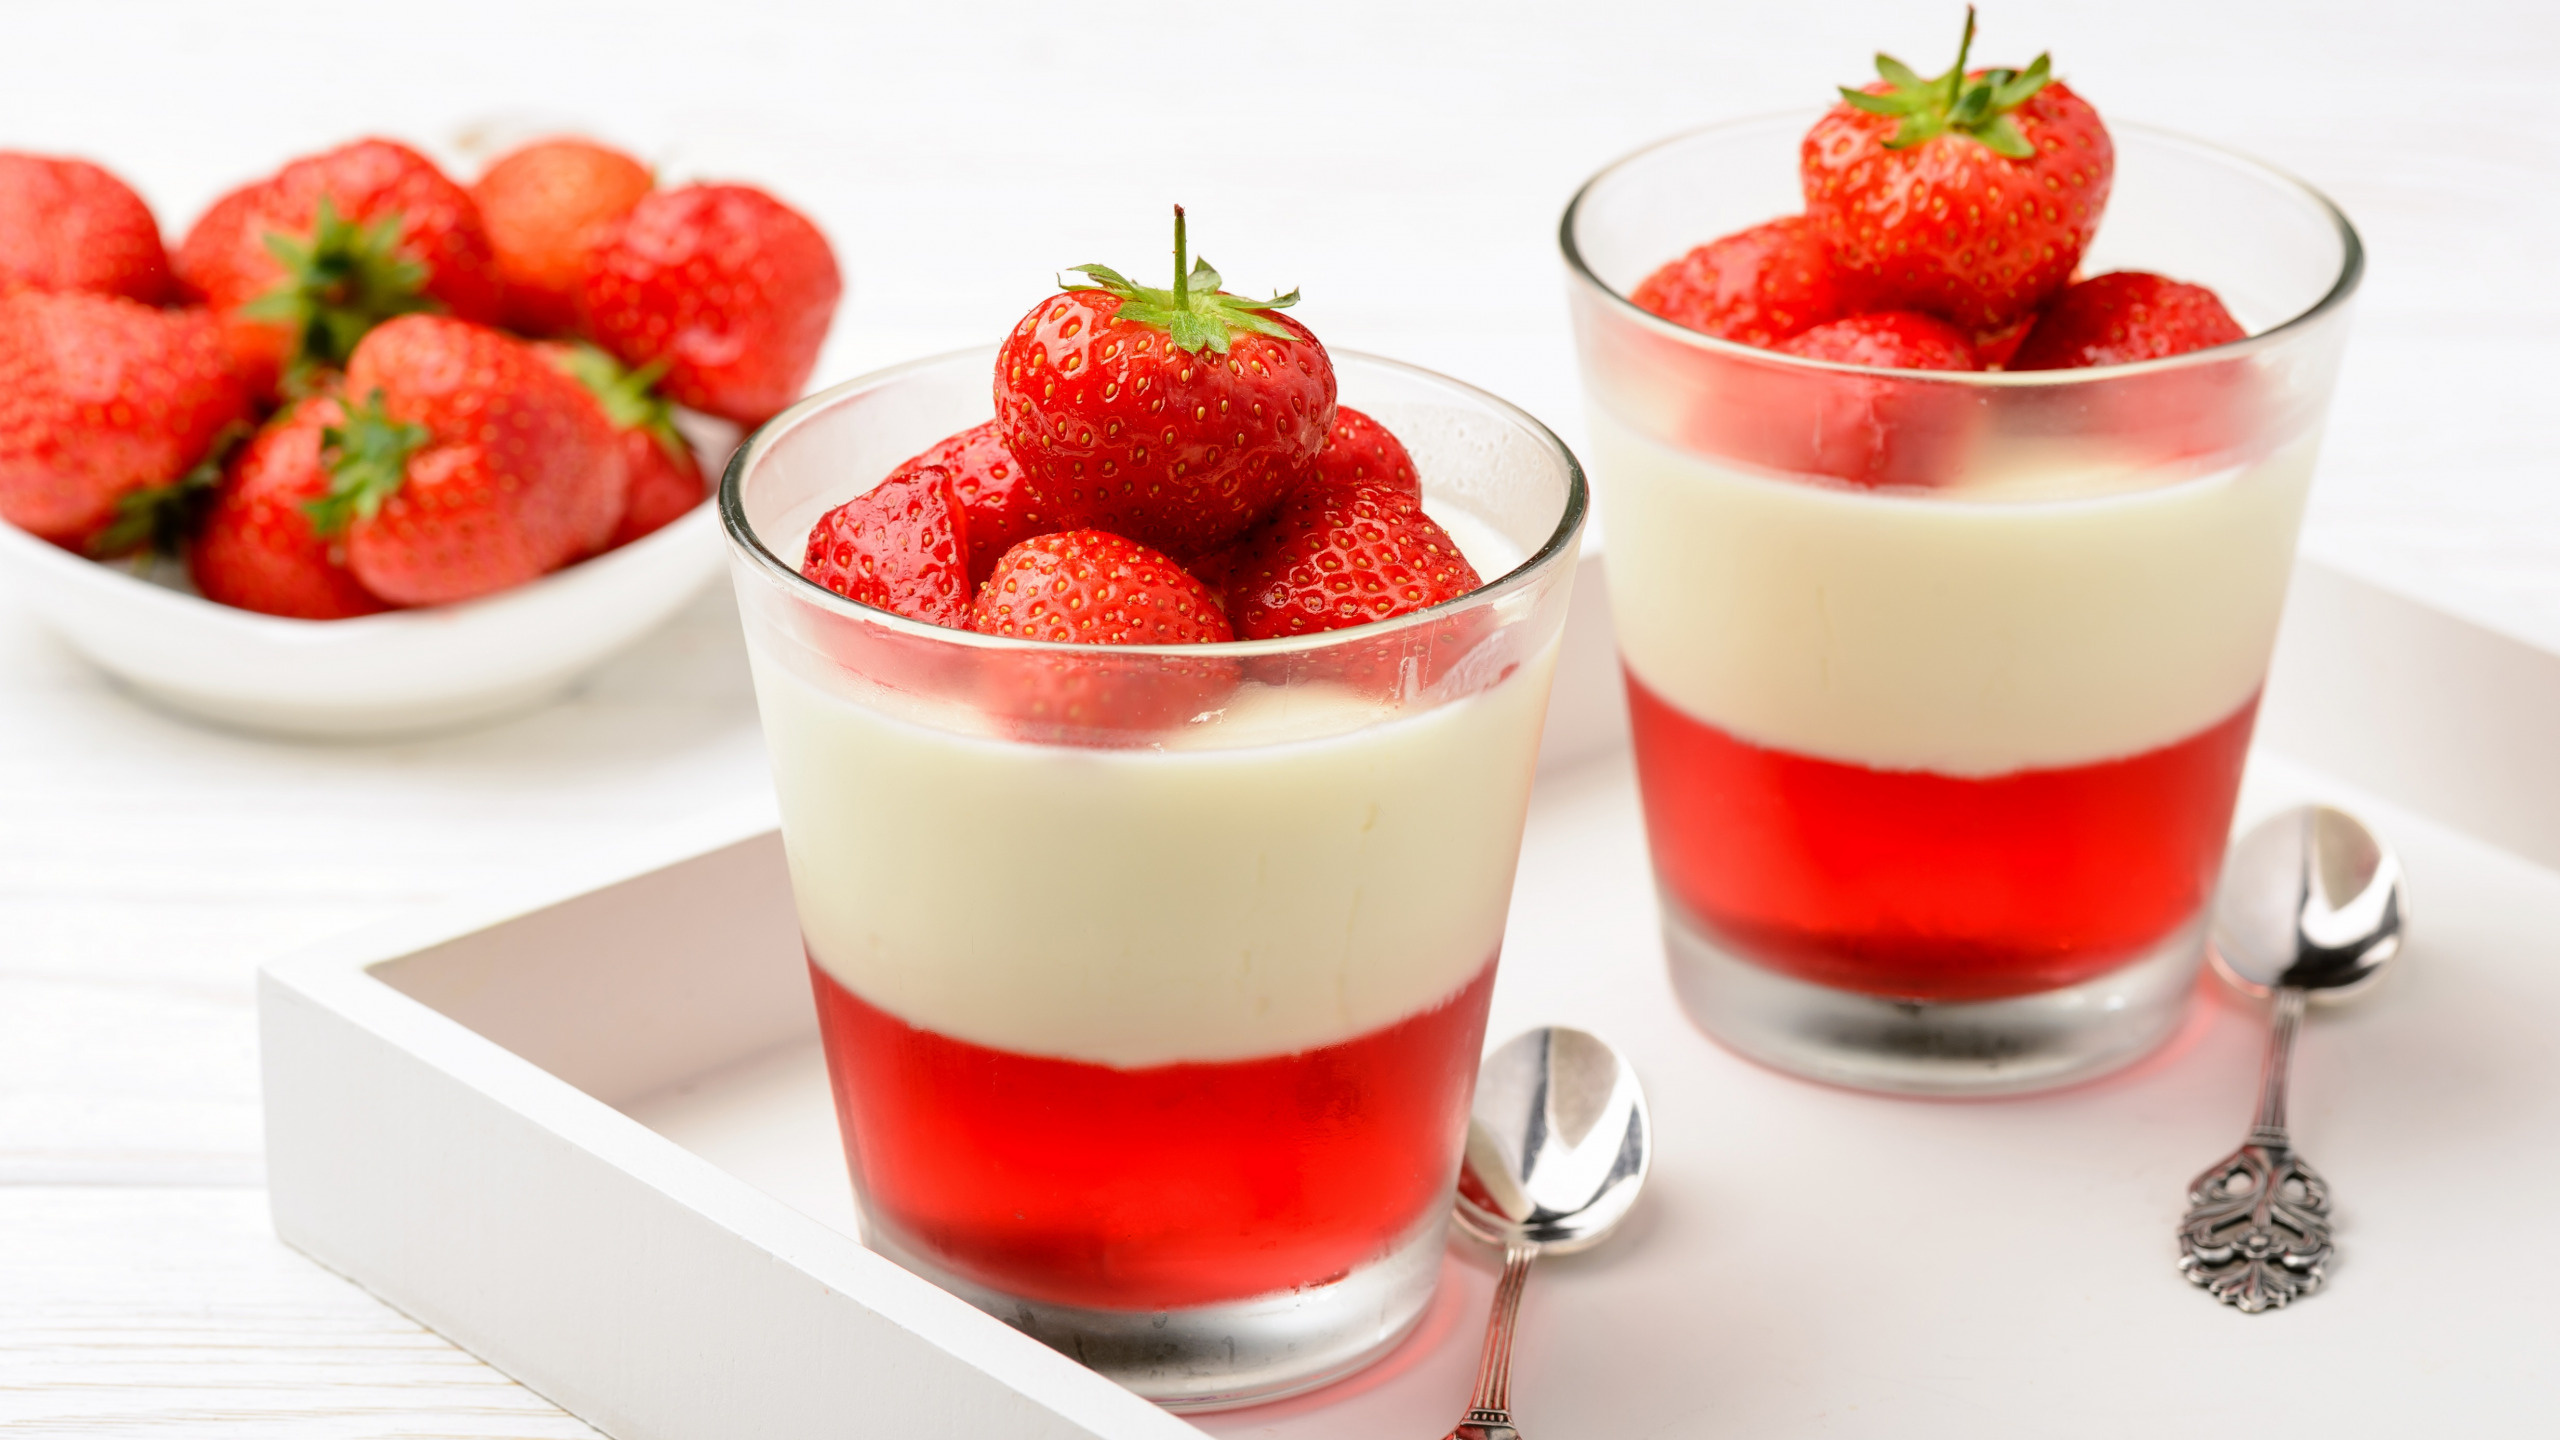 Strawberry bliss, Creamy yogurt treats, Sweet temptation, Scrumptious delight, 2560x1440 HD Desktop